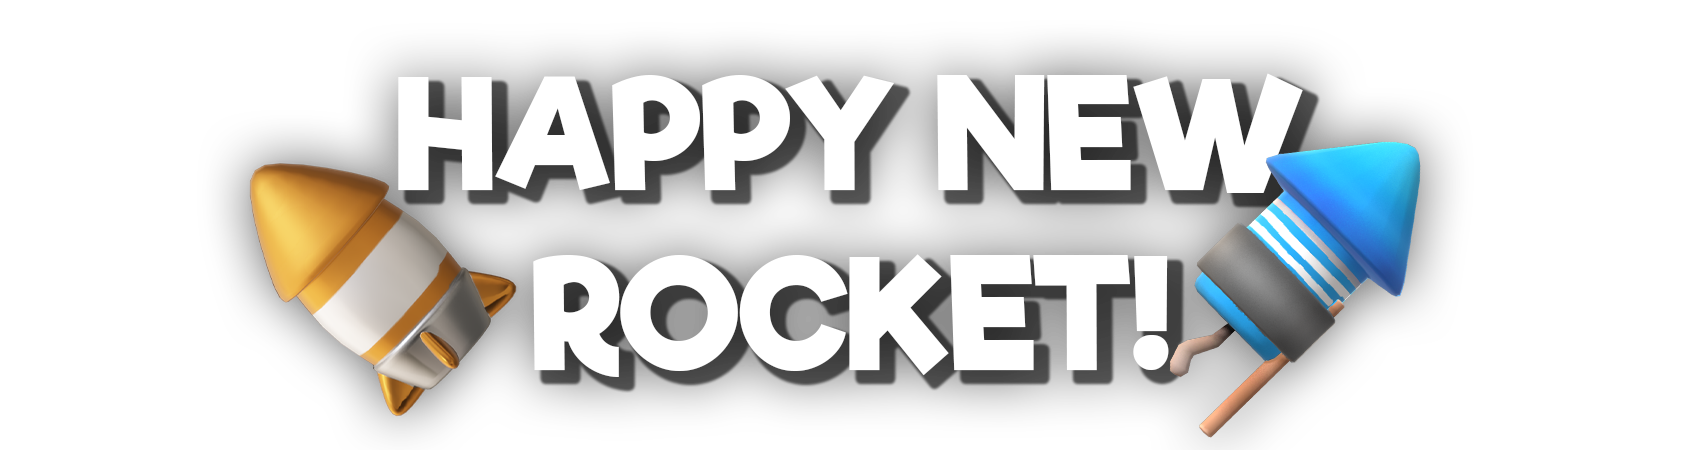 Happy New Rocket!